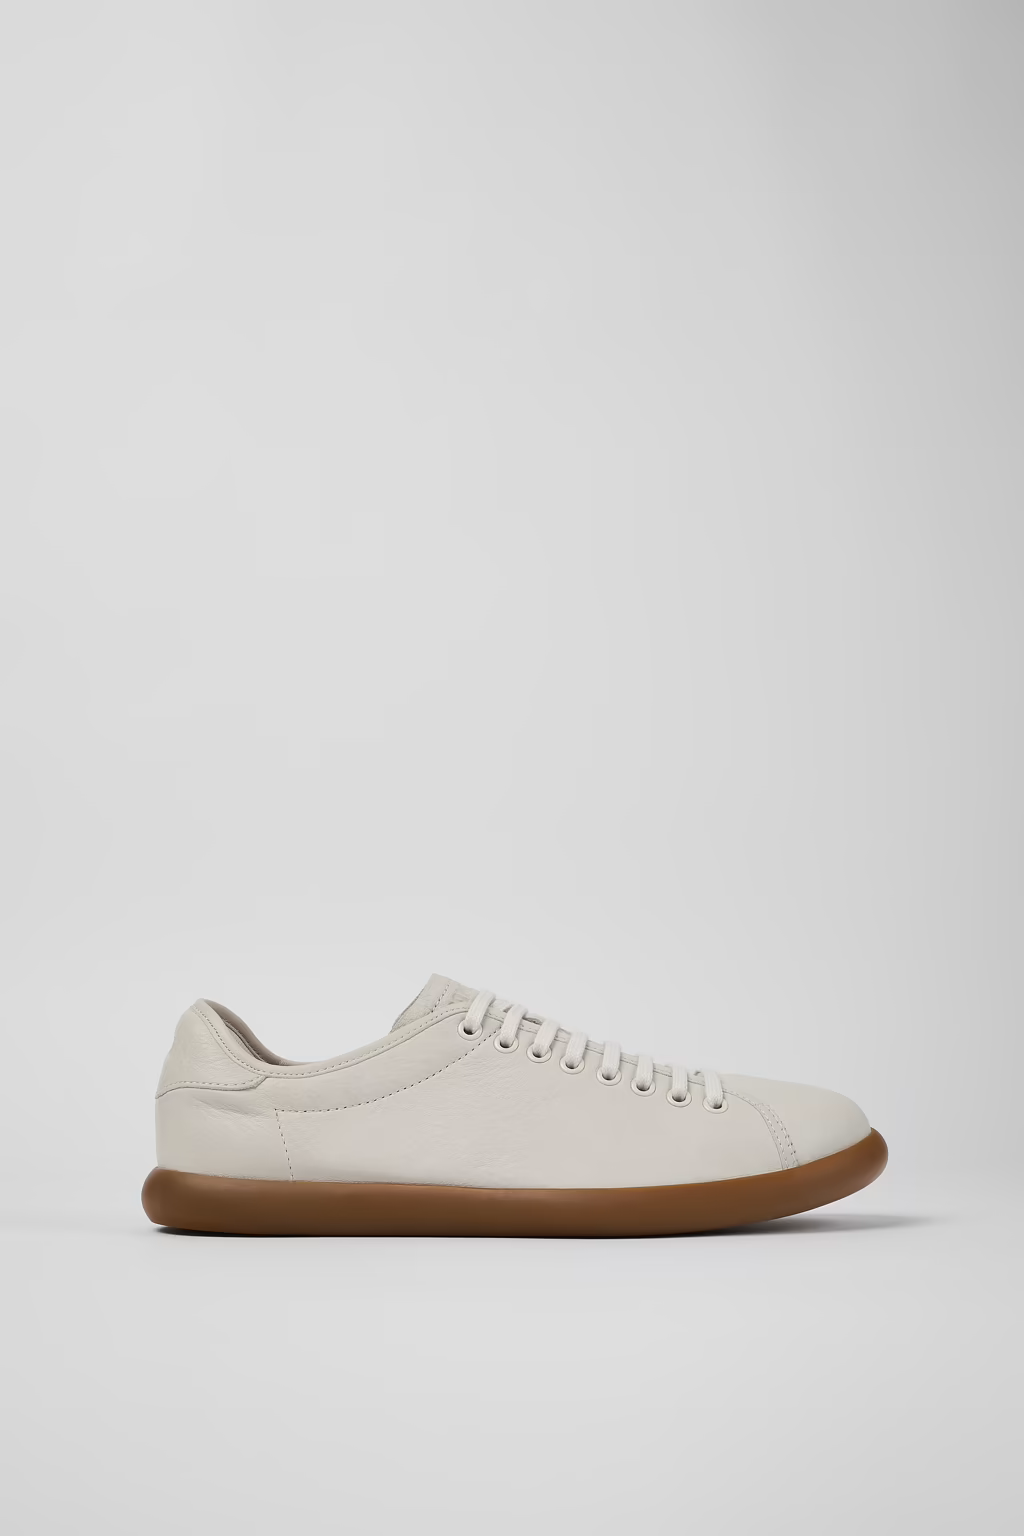 Camper Men's K100974 Pelotas Soller Nubuck Leather Sneakers White